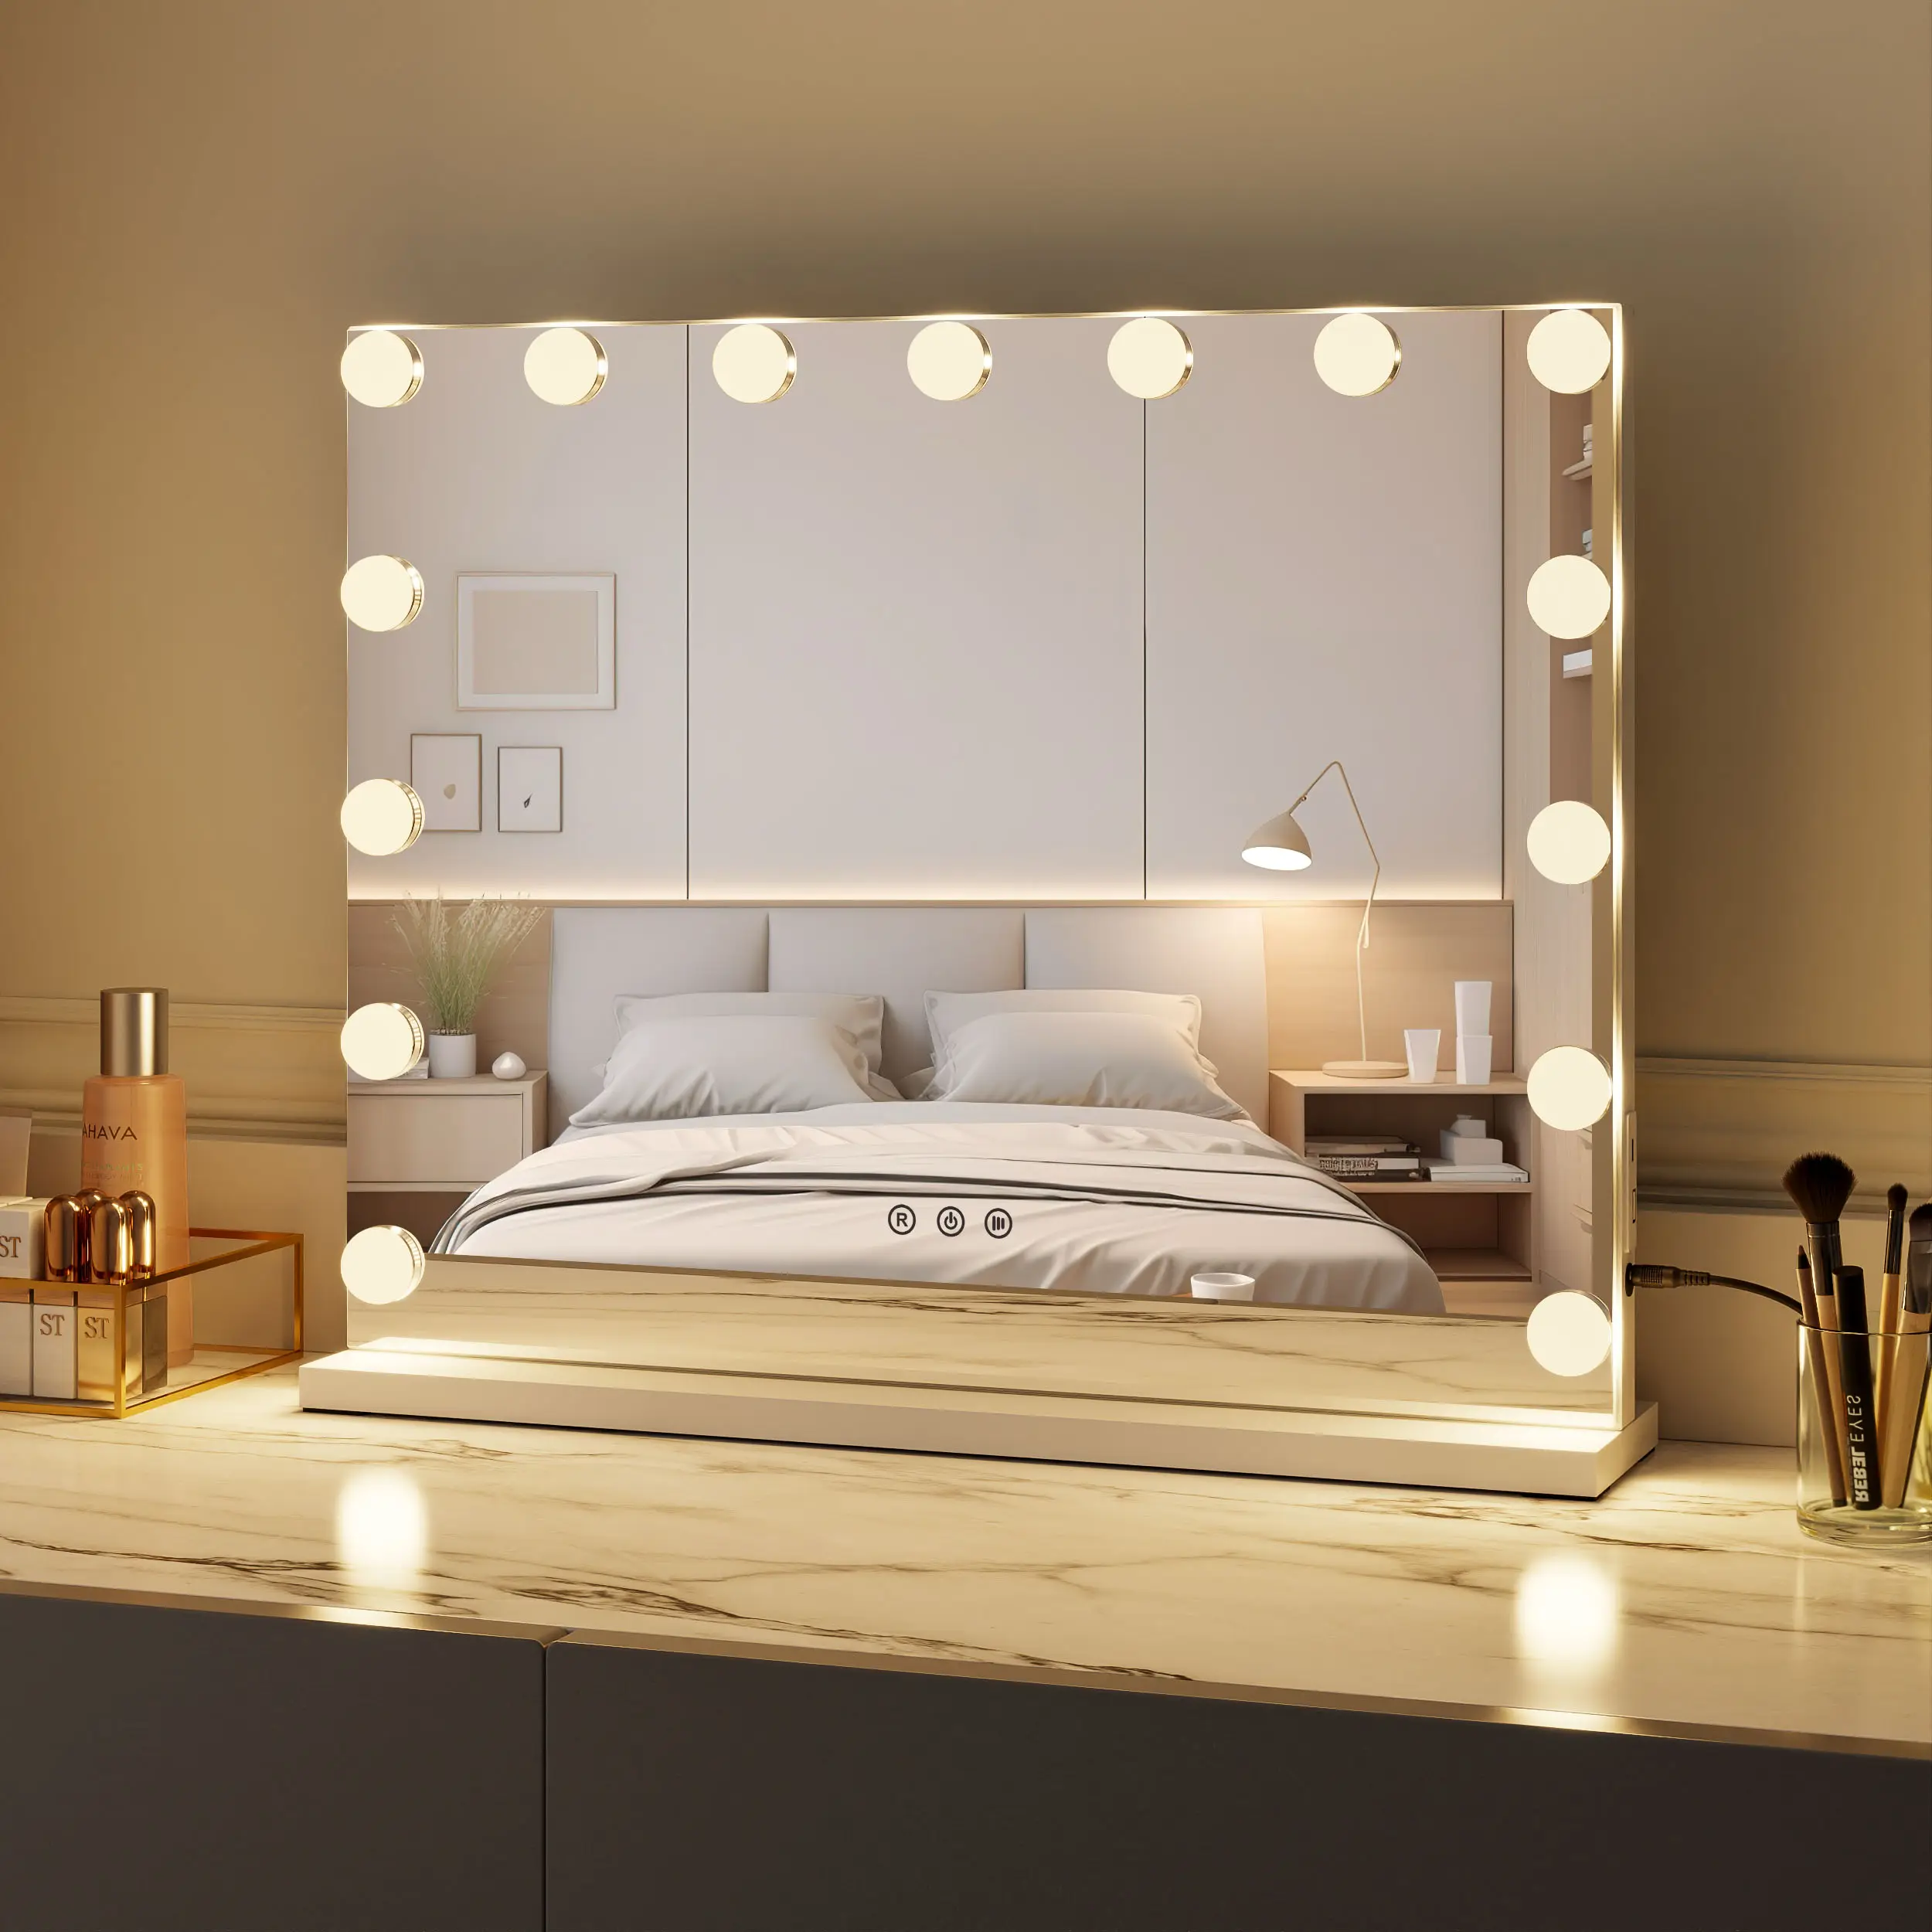 58x46cm Type-C 15 밝기 조절이 가능한 Led 전구 흰색 Led 메이크업 금속 프레임 화장품 조정 가능한 밝기 할리우드 화장대 거울